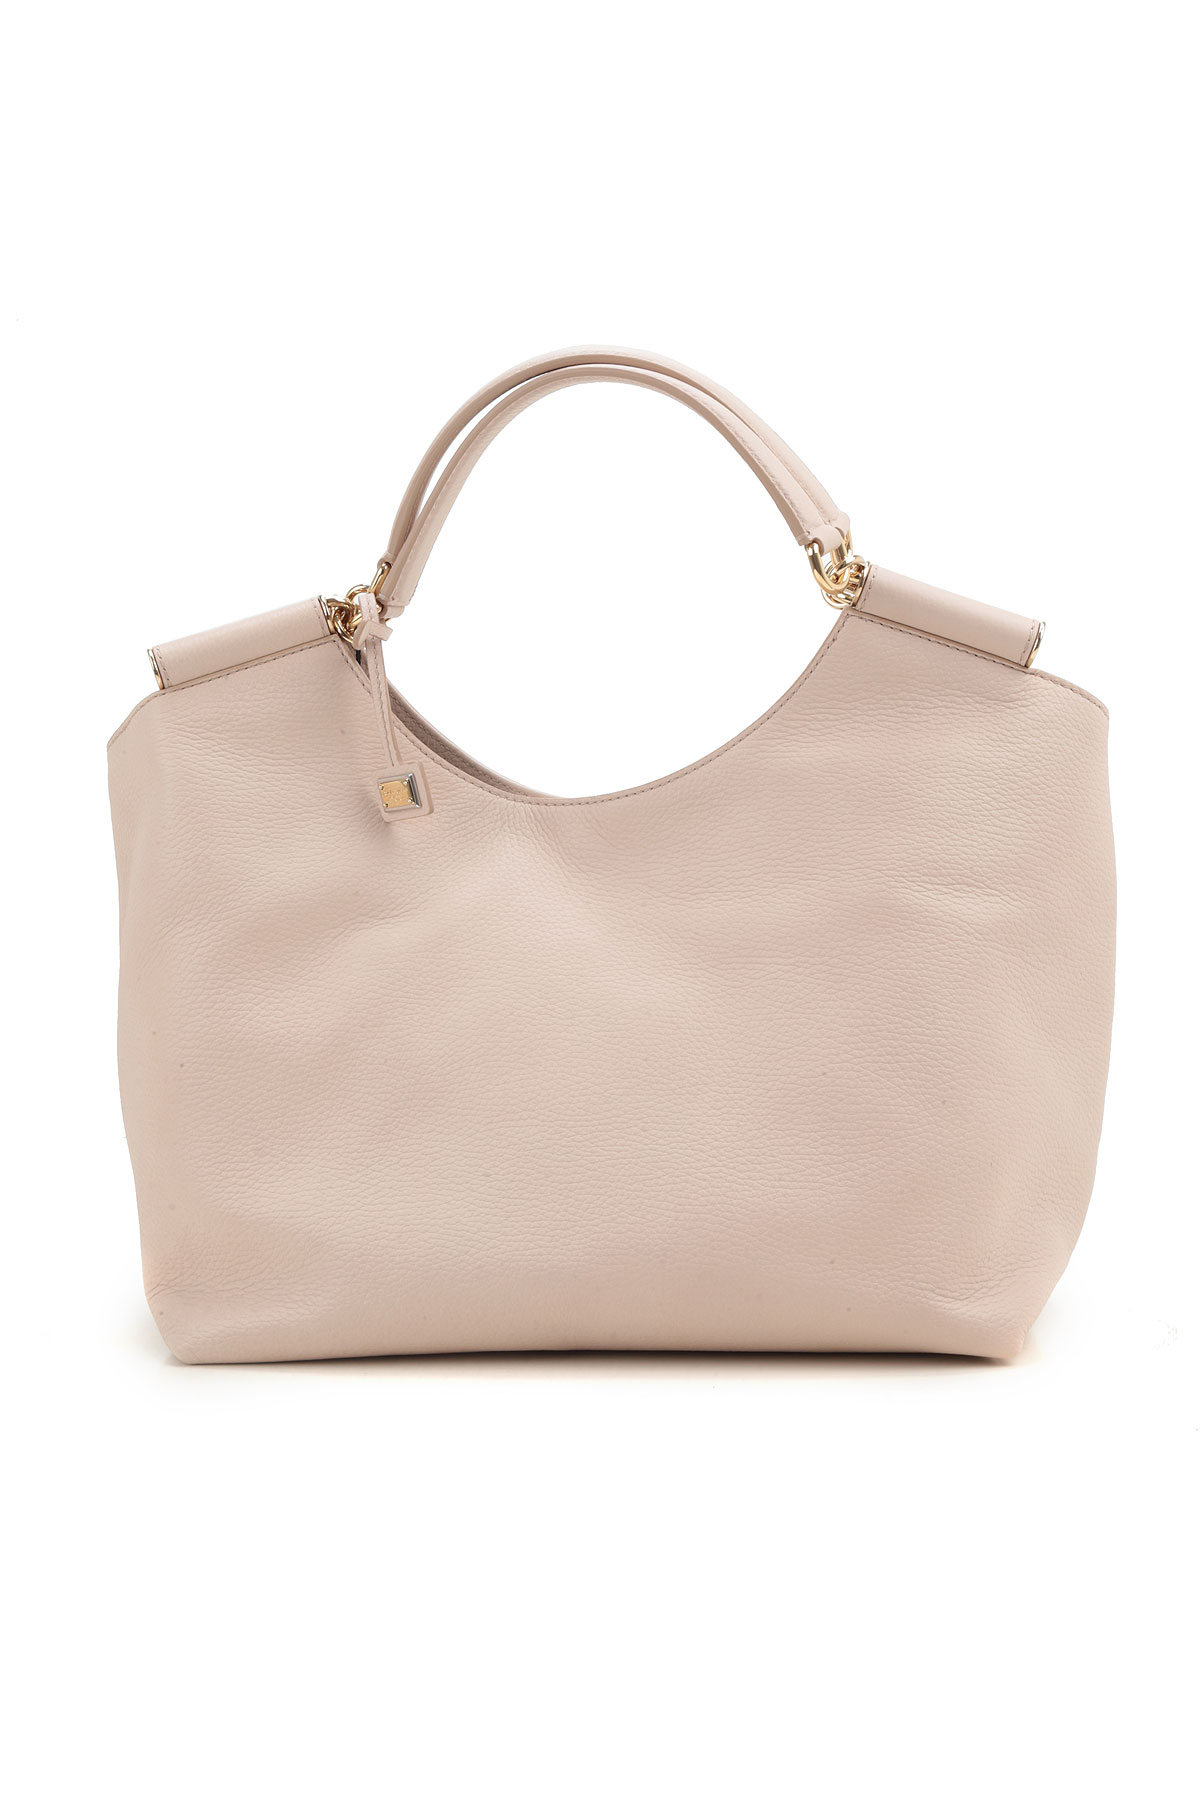 Handbags Dolce & Gabbana, Style code: bb6135-a8c80-80414